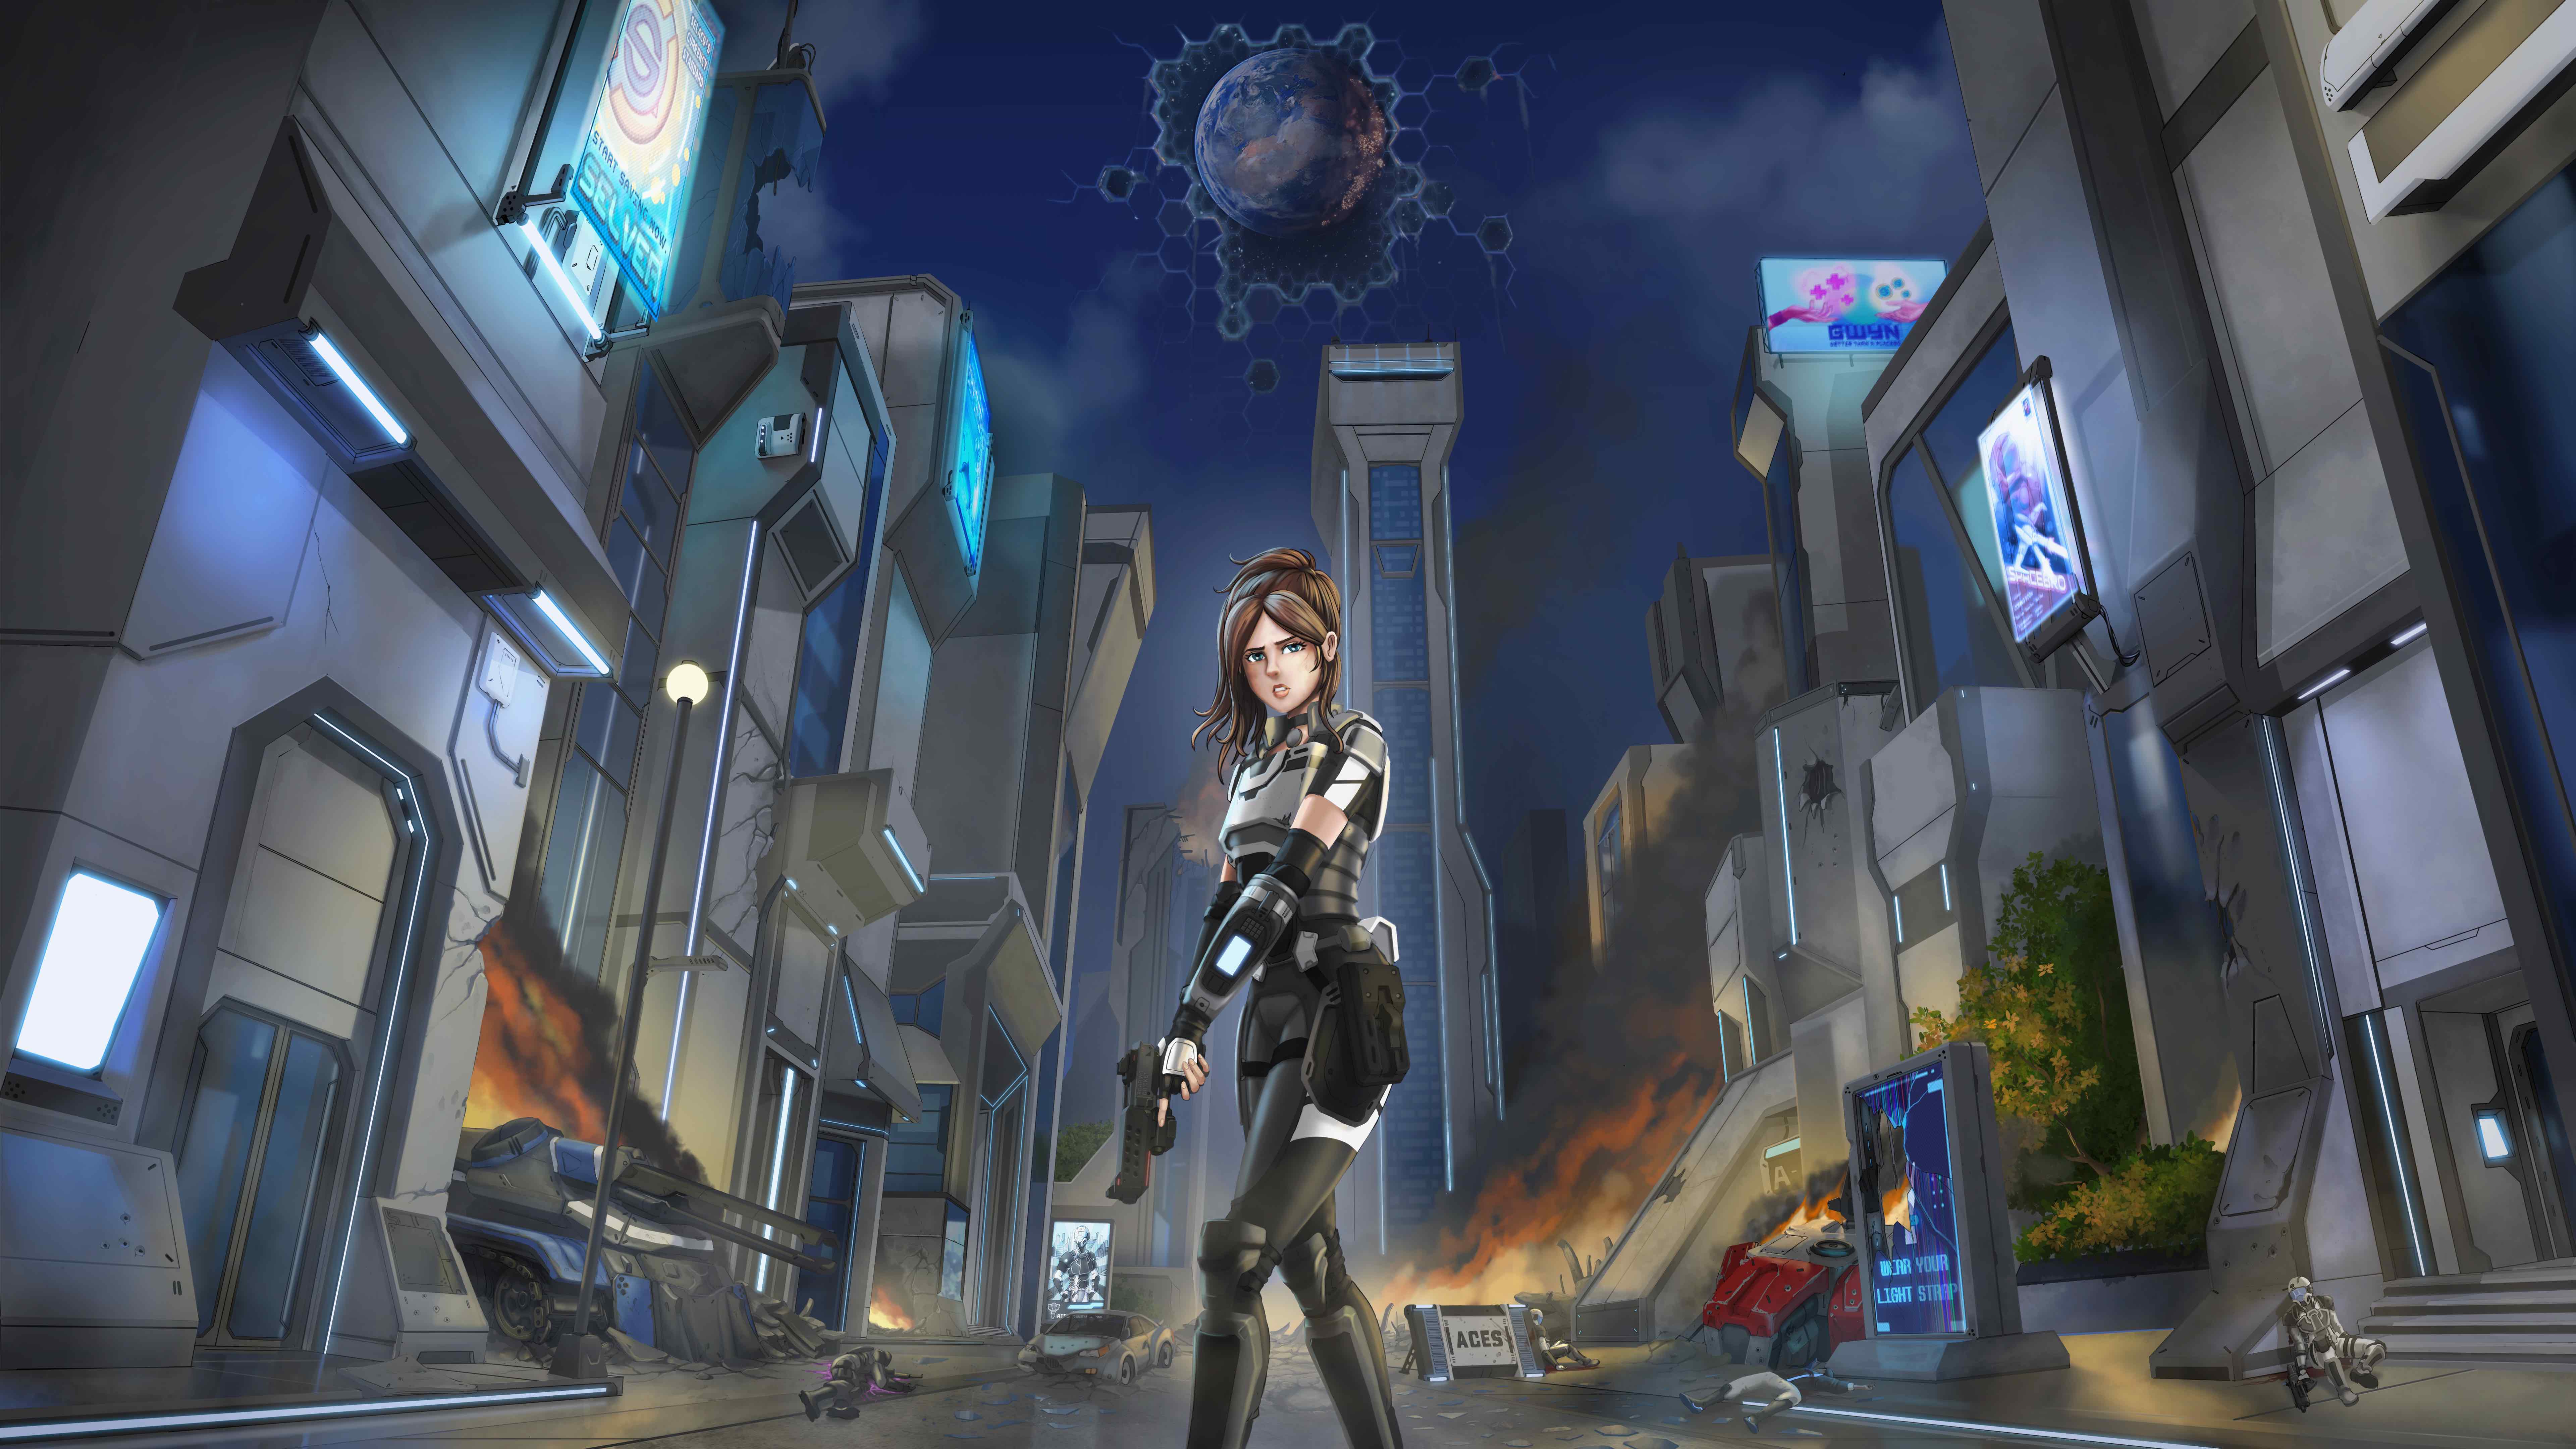 Artwork of protagonist Dawn overlooking Selaco's city streets